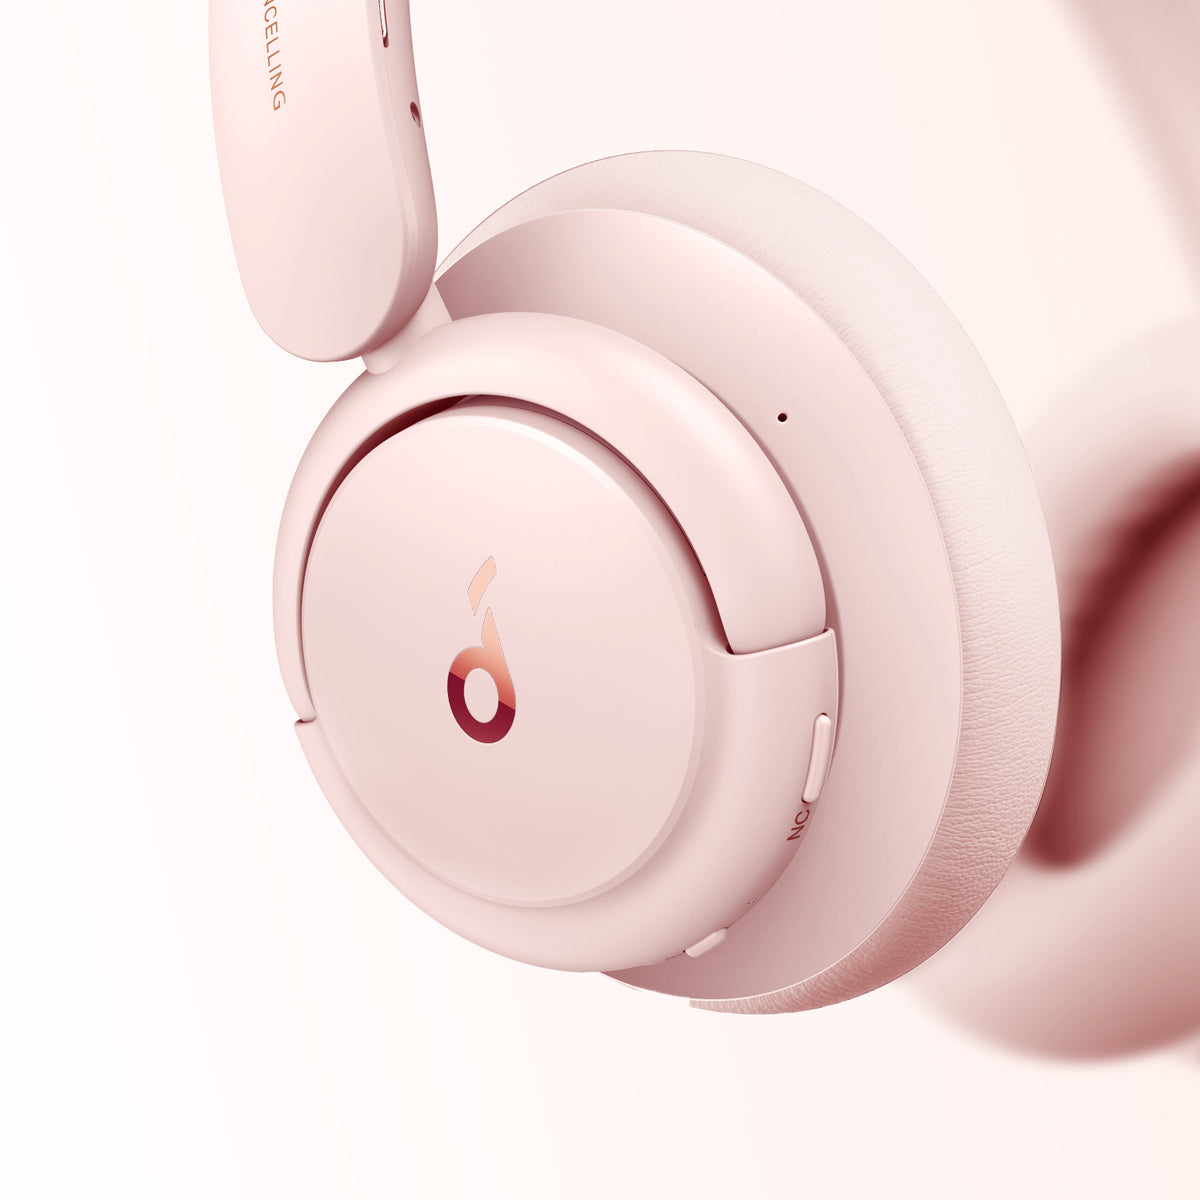 Q30 | Bluetooth Noise Cancelling Headphones